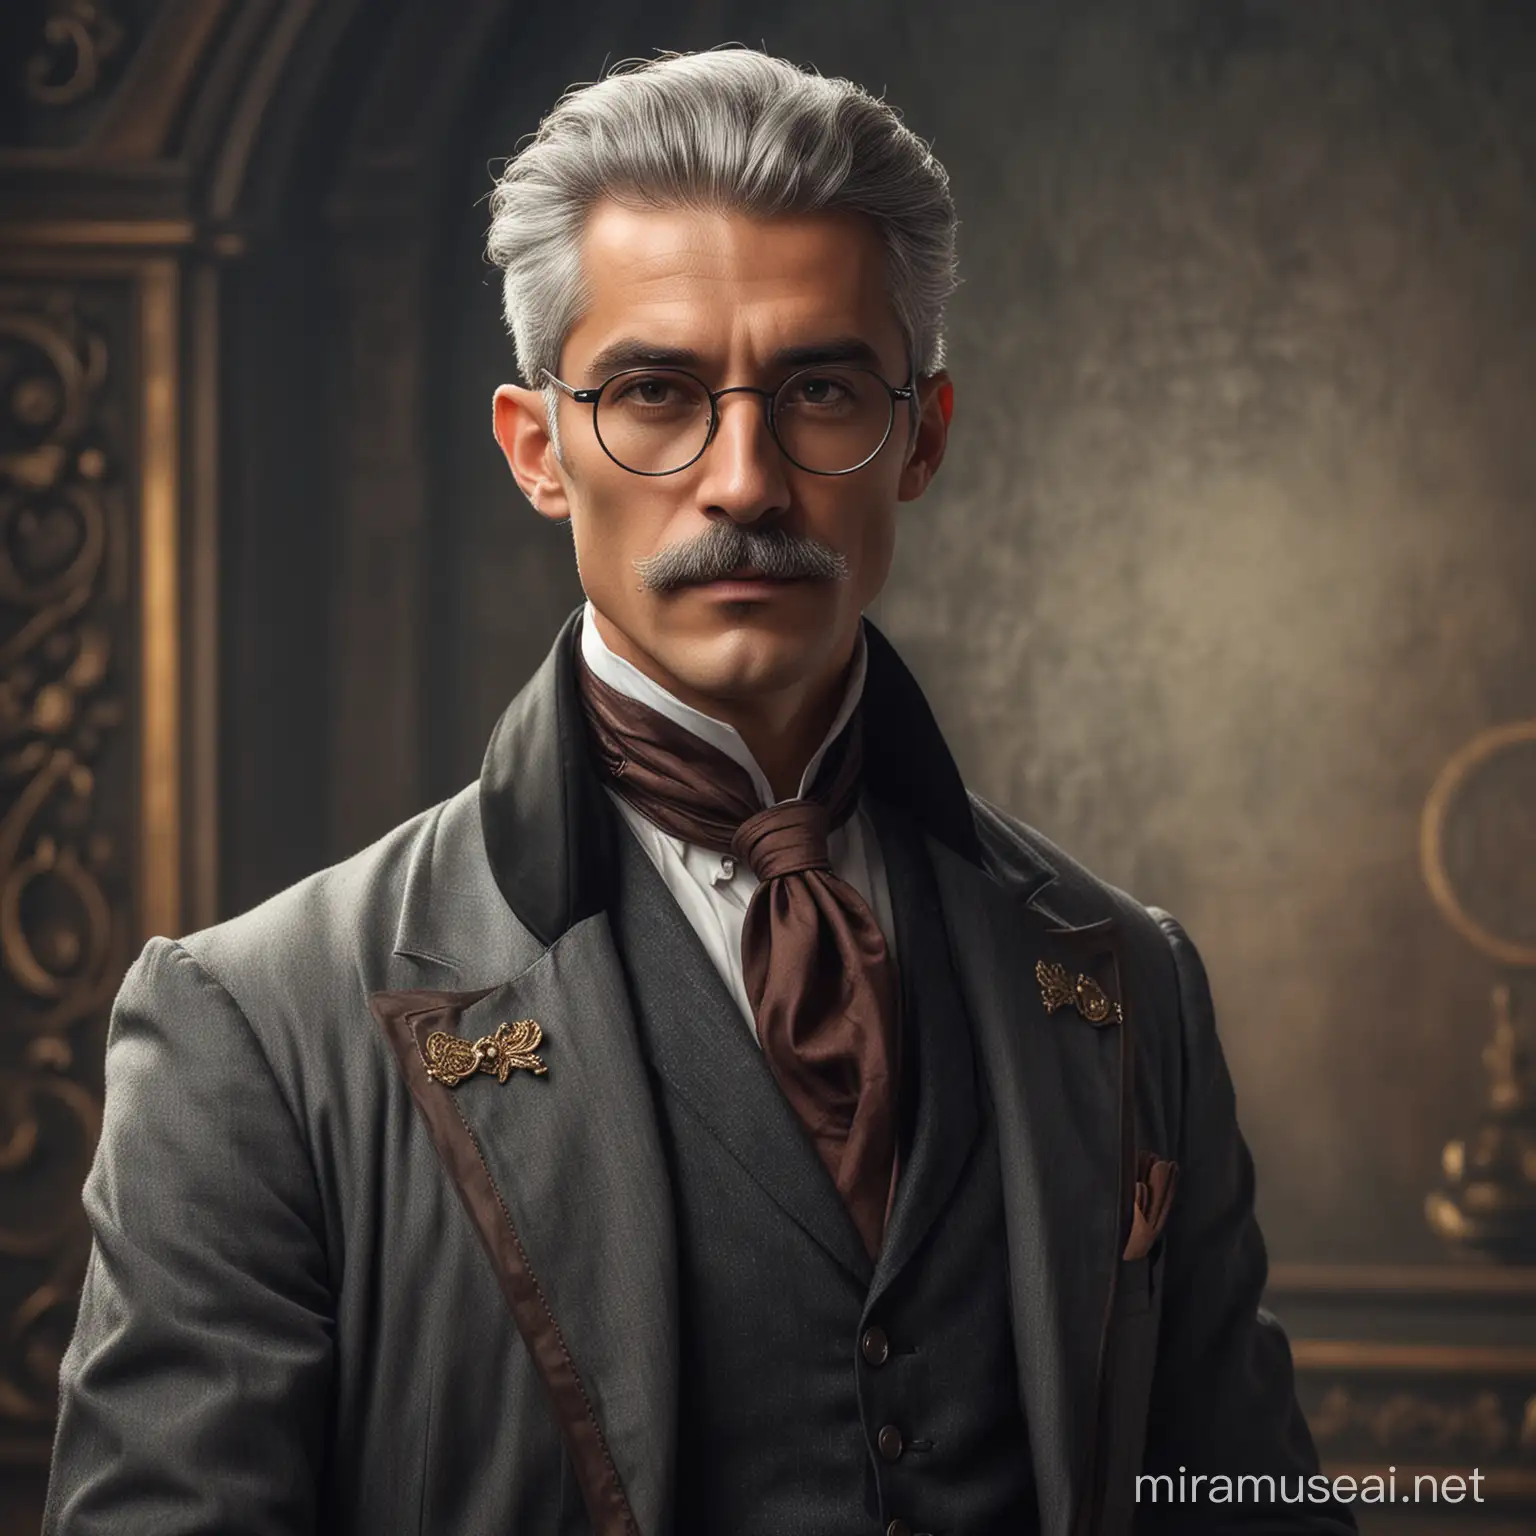 grey hair, round glasses, gentlemen, tall and slender, tanned skin, moustaches, sharp ear, fantasy nobleman attire